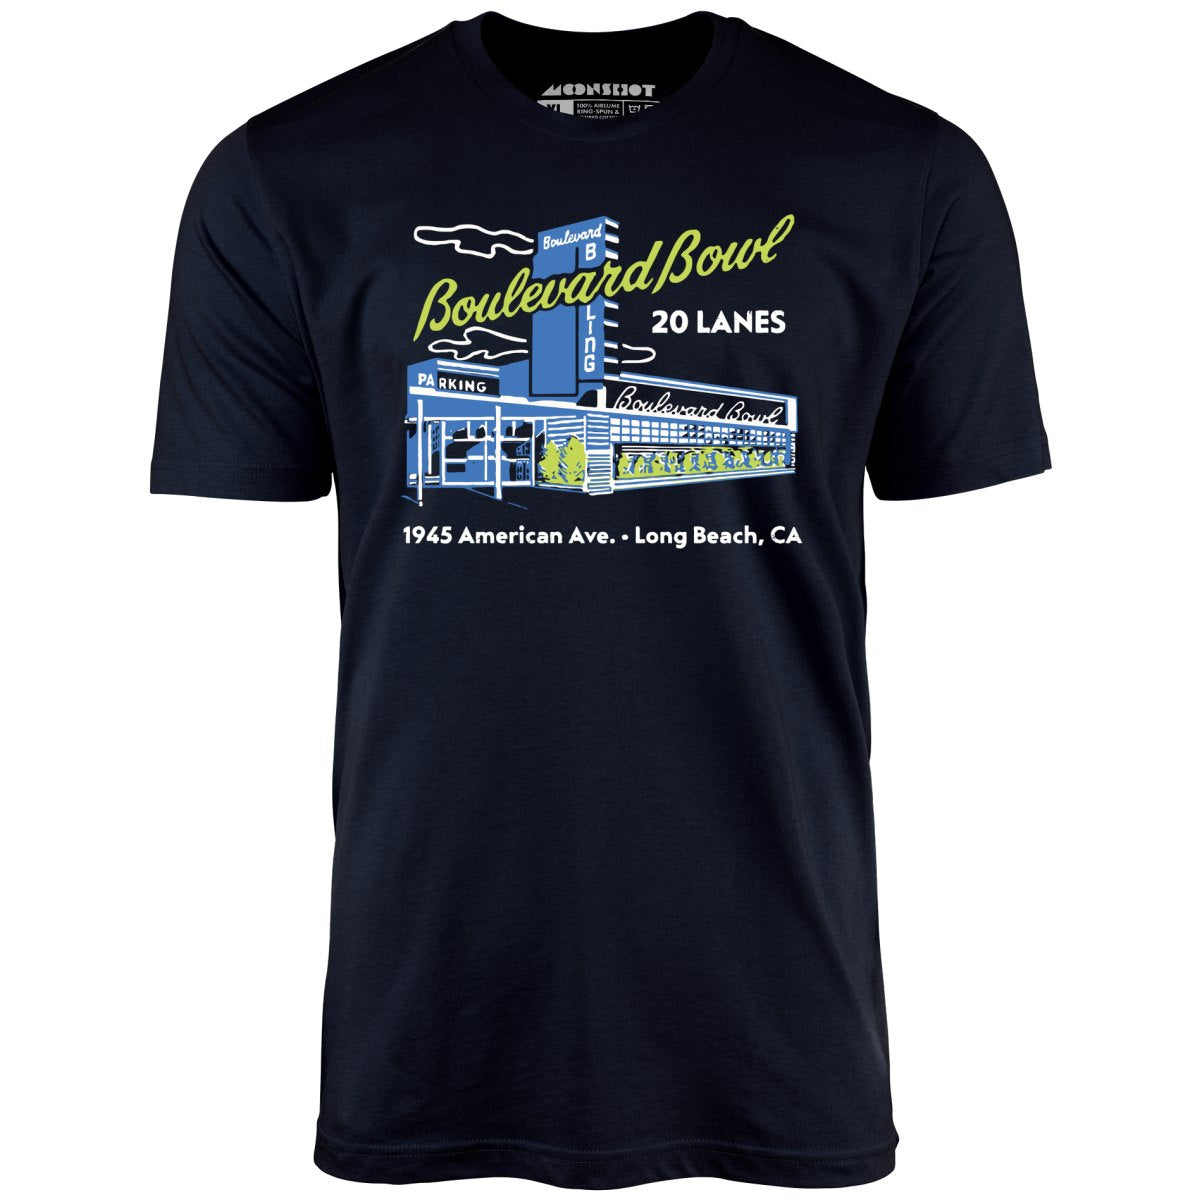 Boulevard Bowl - Long Beach, CA - Vintage Bowling Alley - Unisex T-Shirt